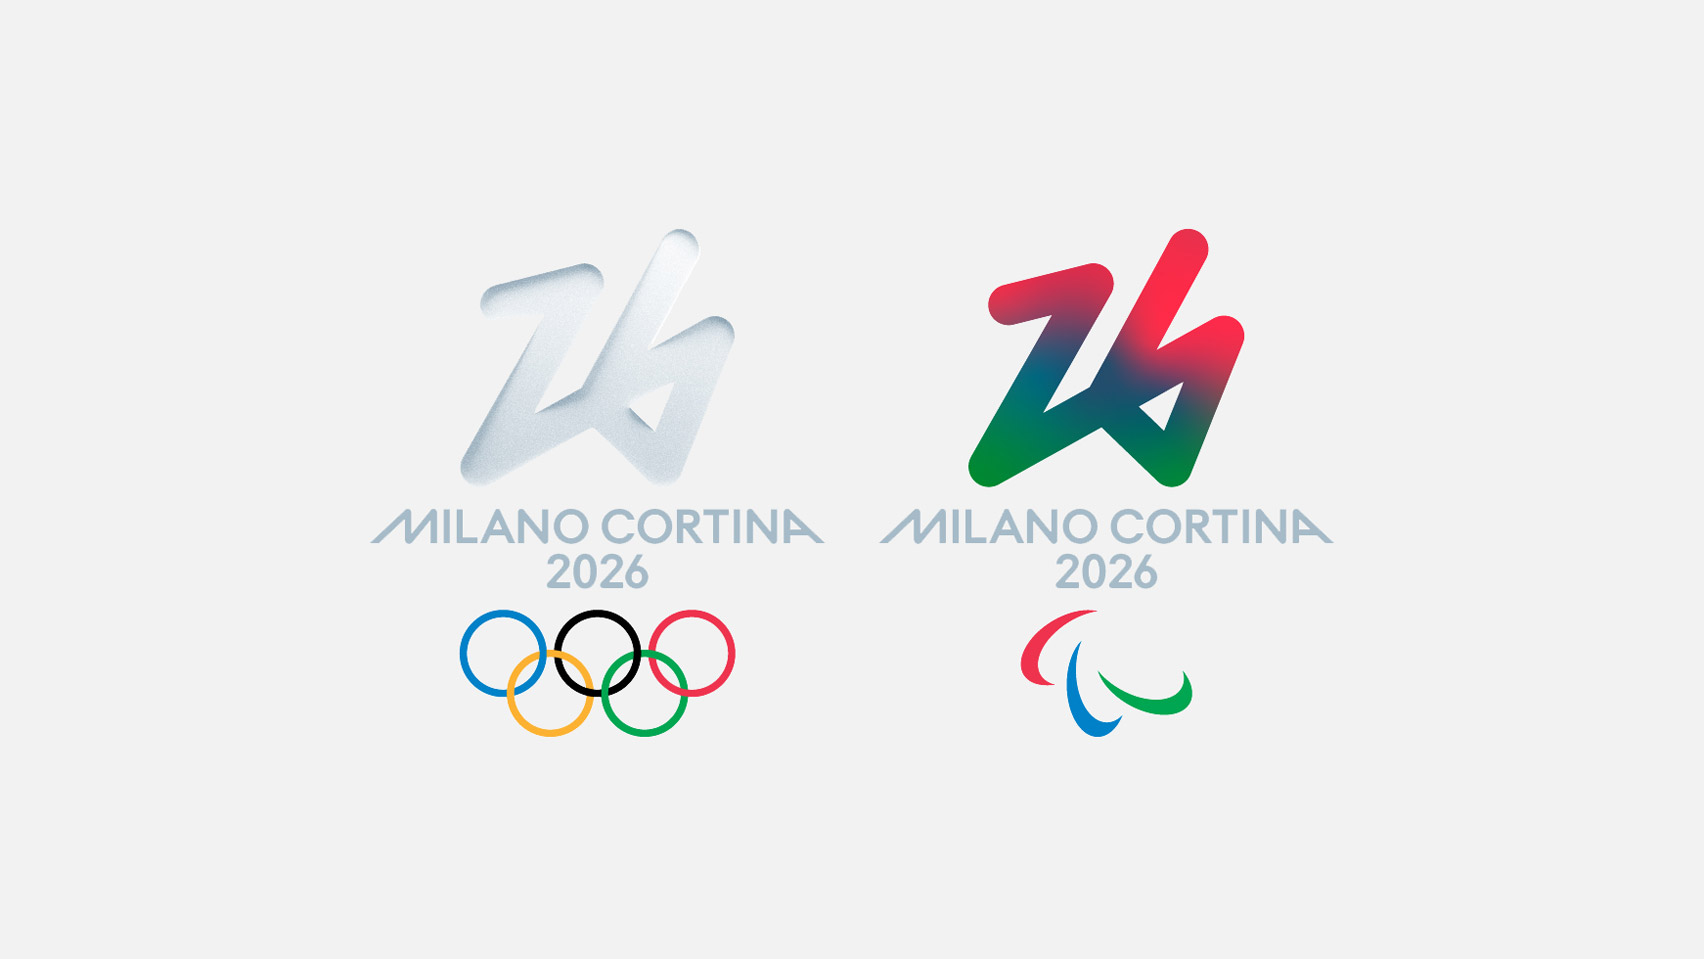 Milan Cortina 2026 has approved its financial statements for 2021 ©Milan Cortina 2026